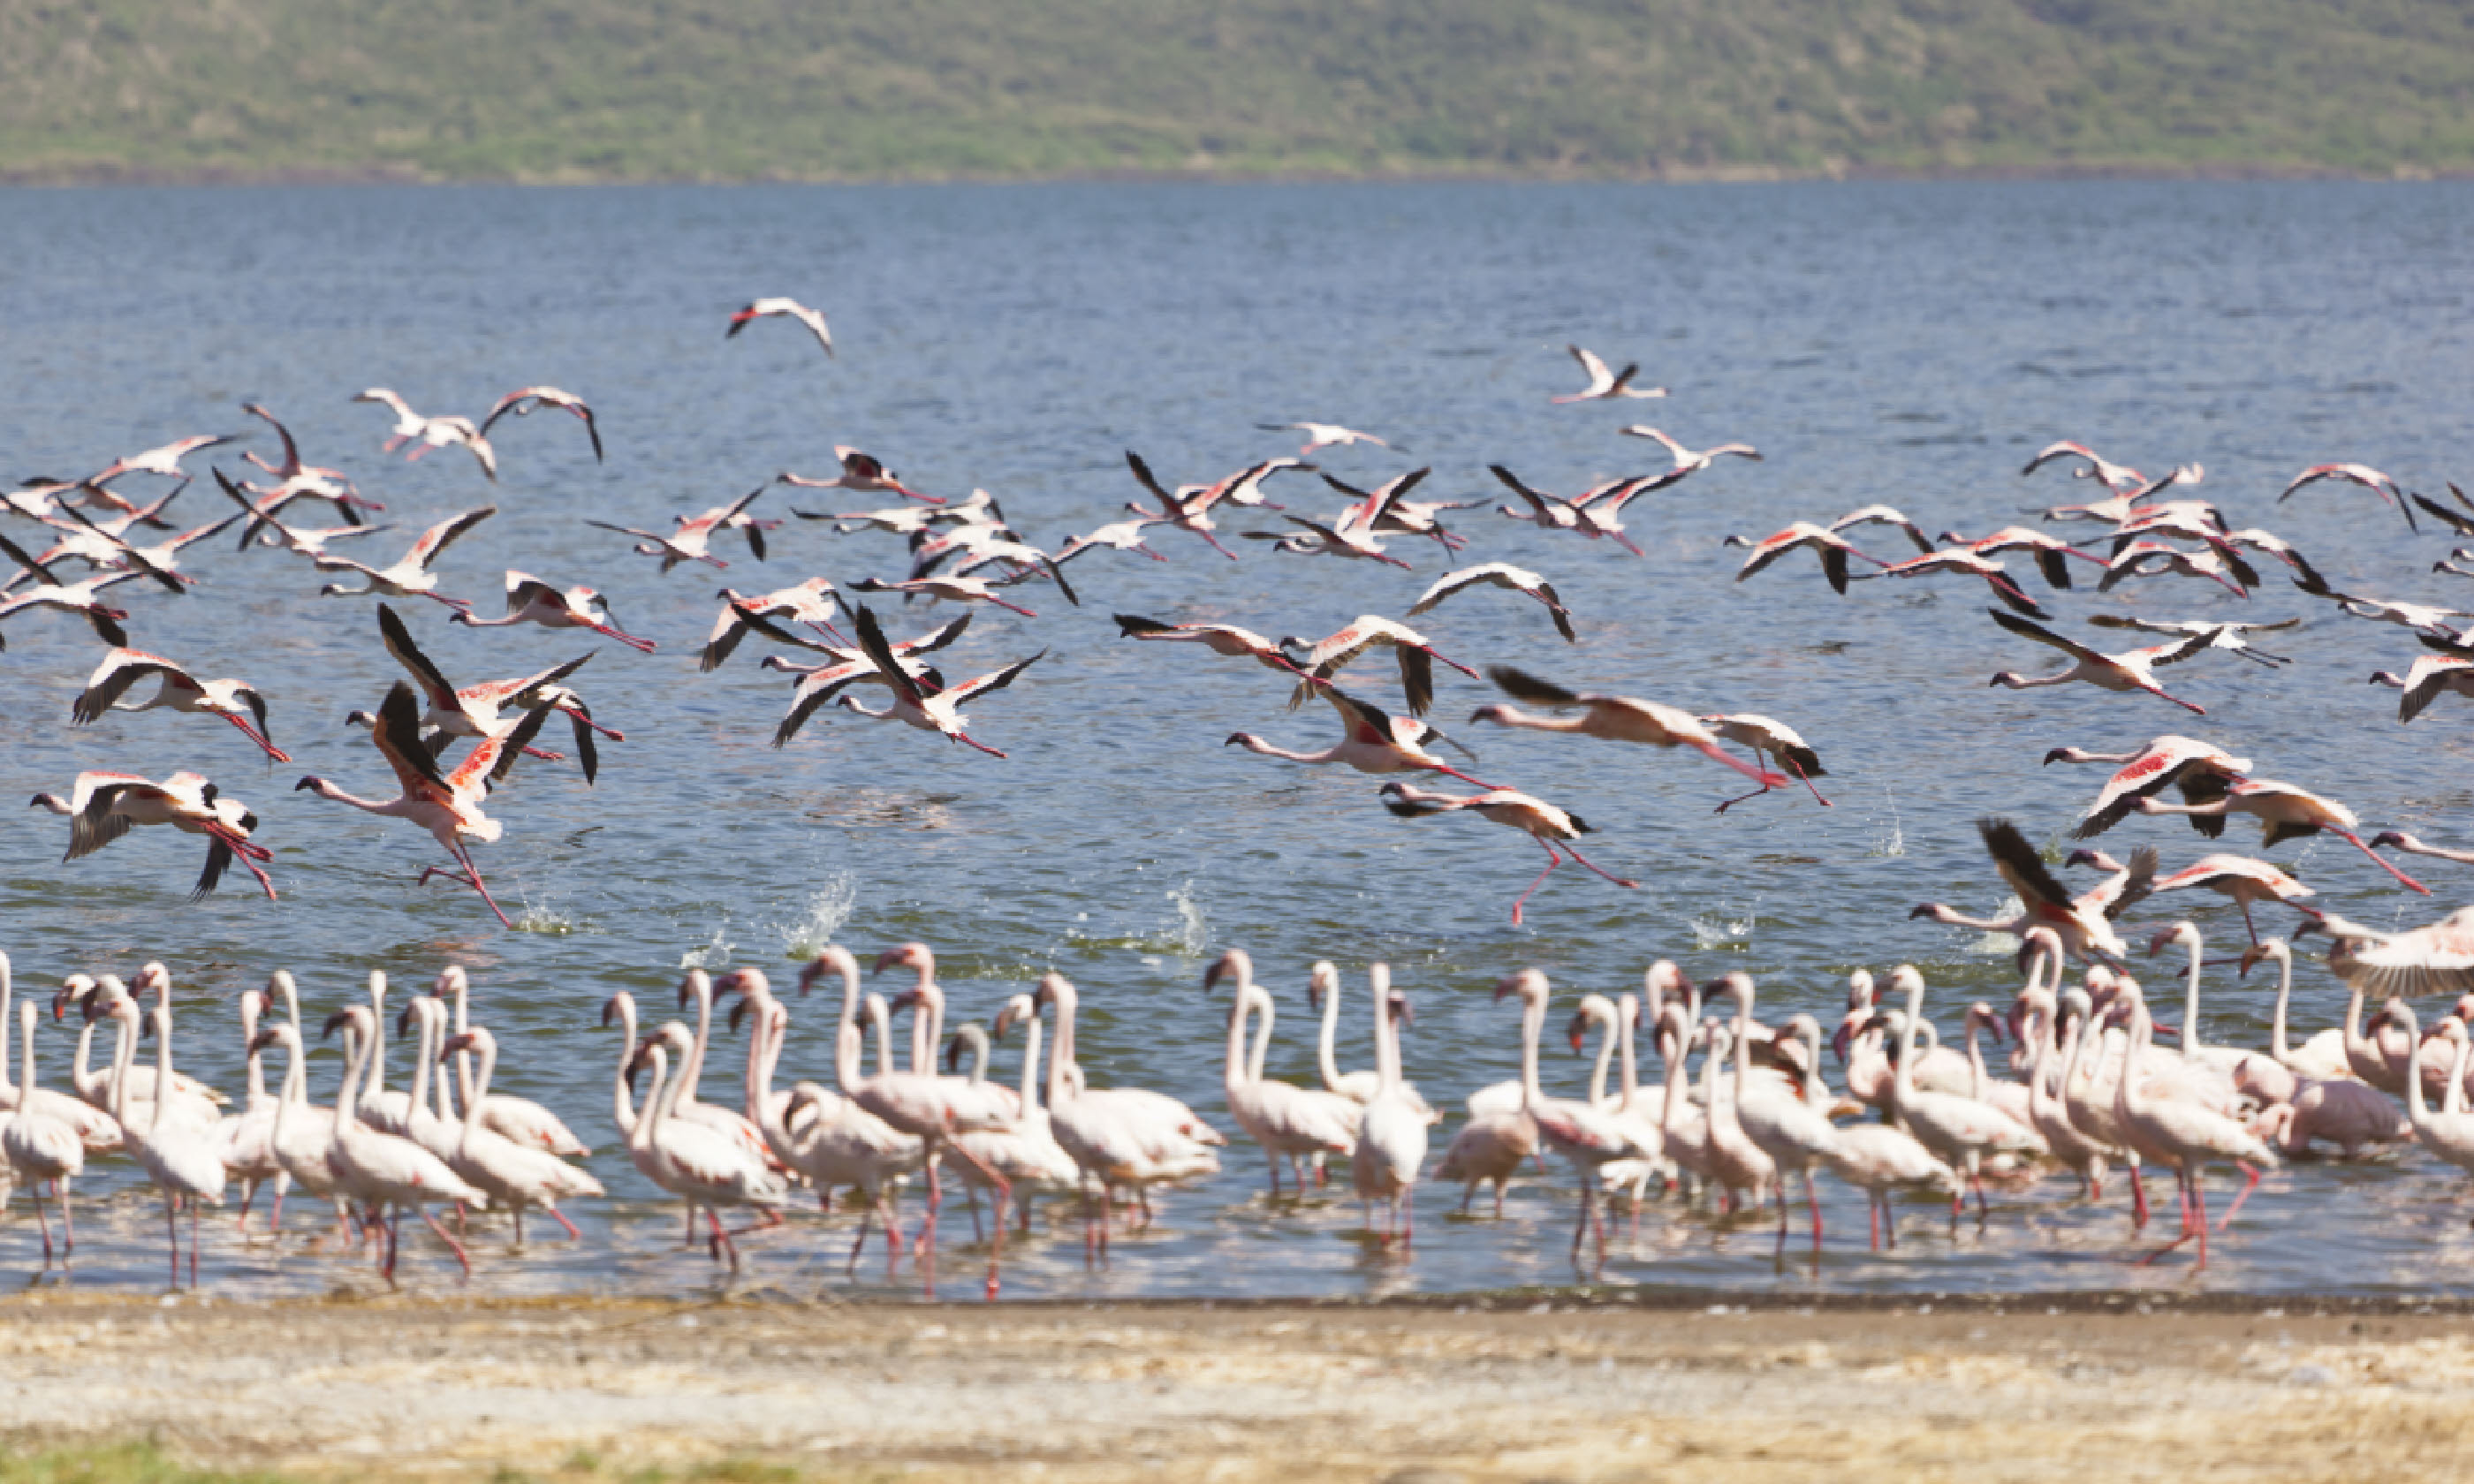 Flamingos flying at Lake Bogoria in Kenya (Shutterstock)